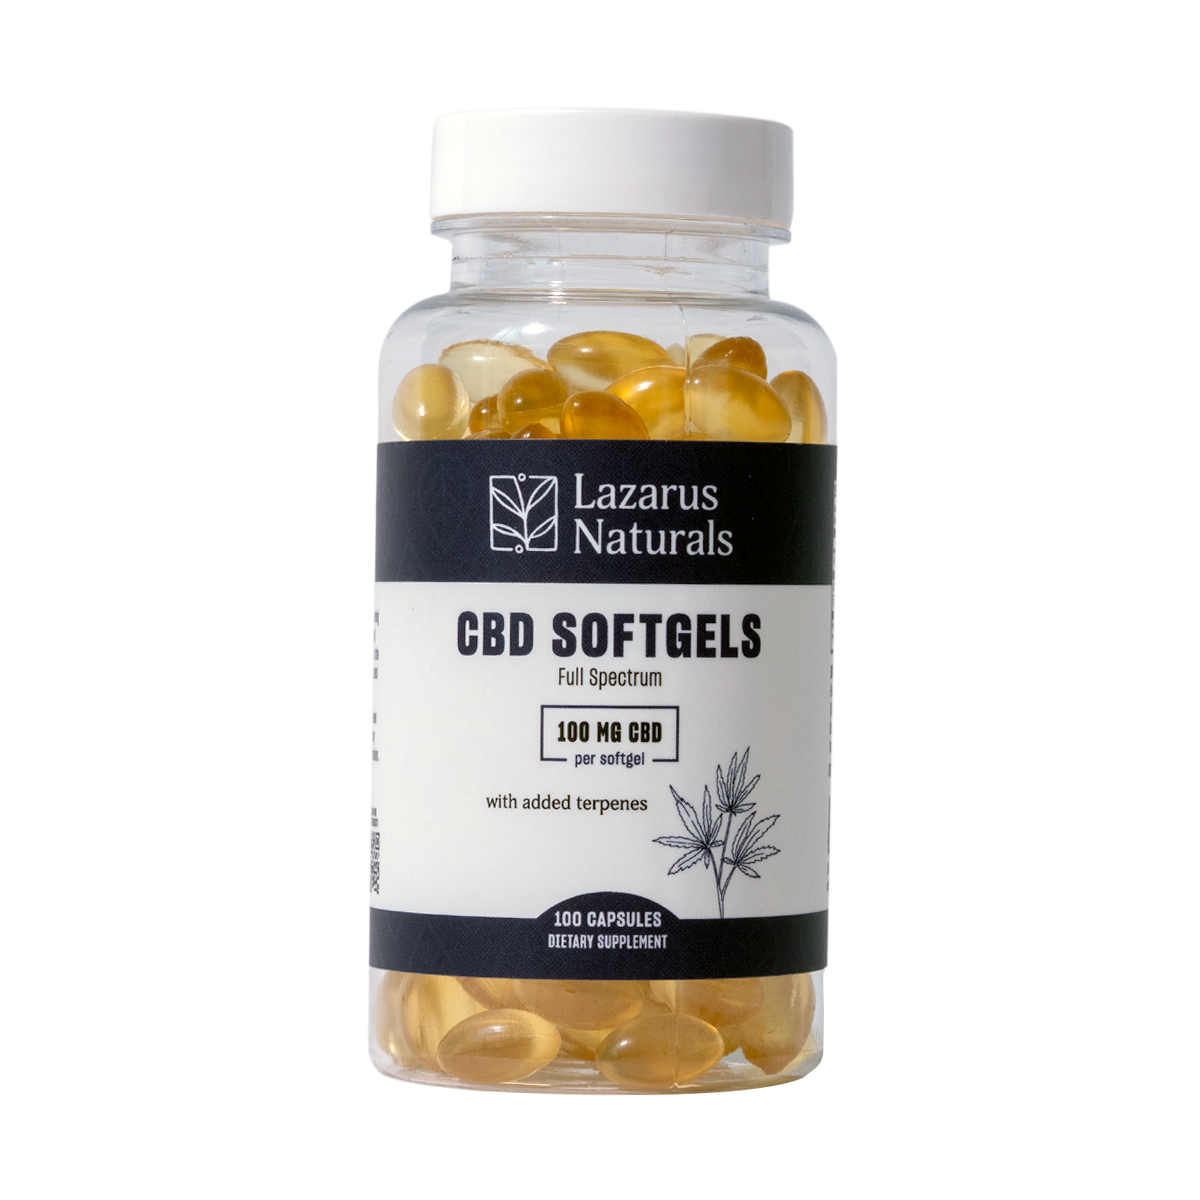 Lazarus Naturals Full Spectrum CBD Softgels, 100mg per softgel with added terpenes, 100 capsules bottle.